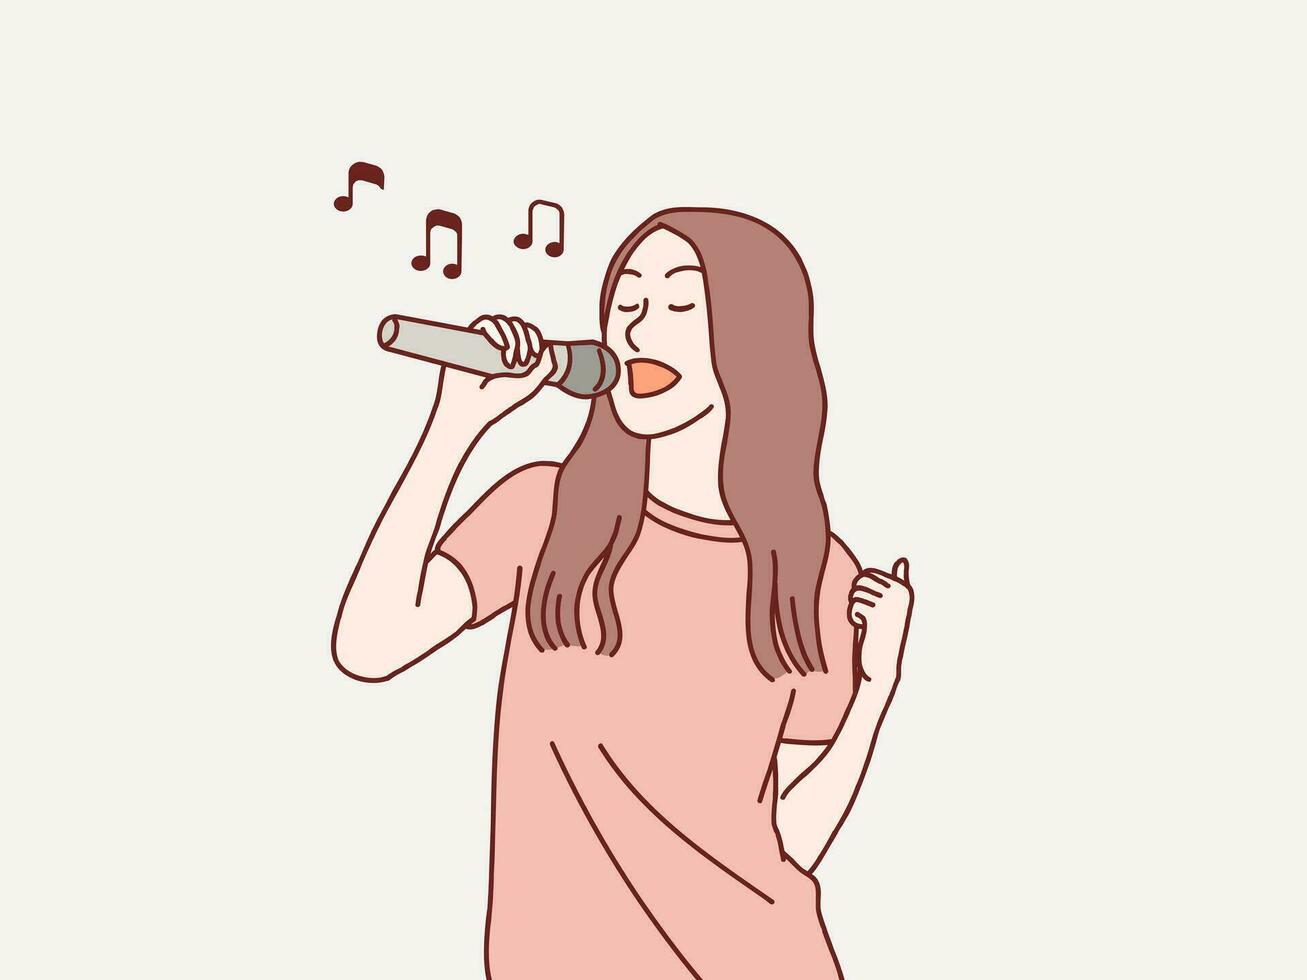 contento salido elegante joven mujer teniendo divertido canta un canción a micrófono sencillo coreano estilo ilustración vector